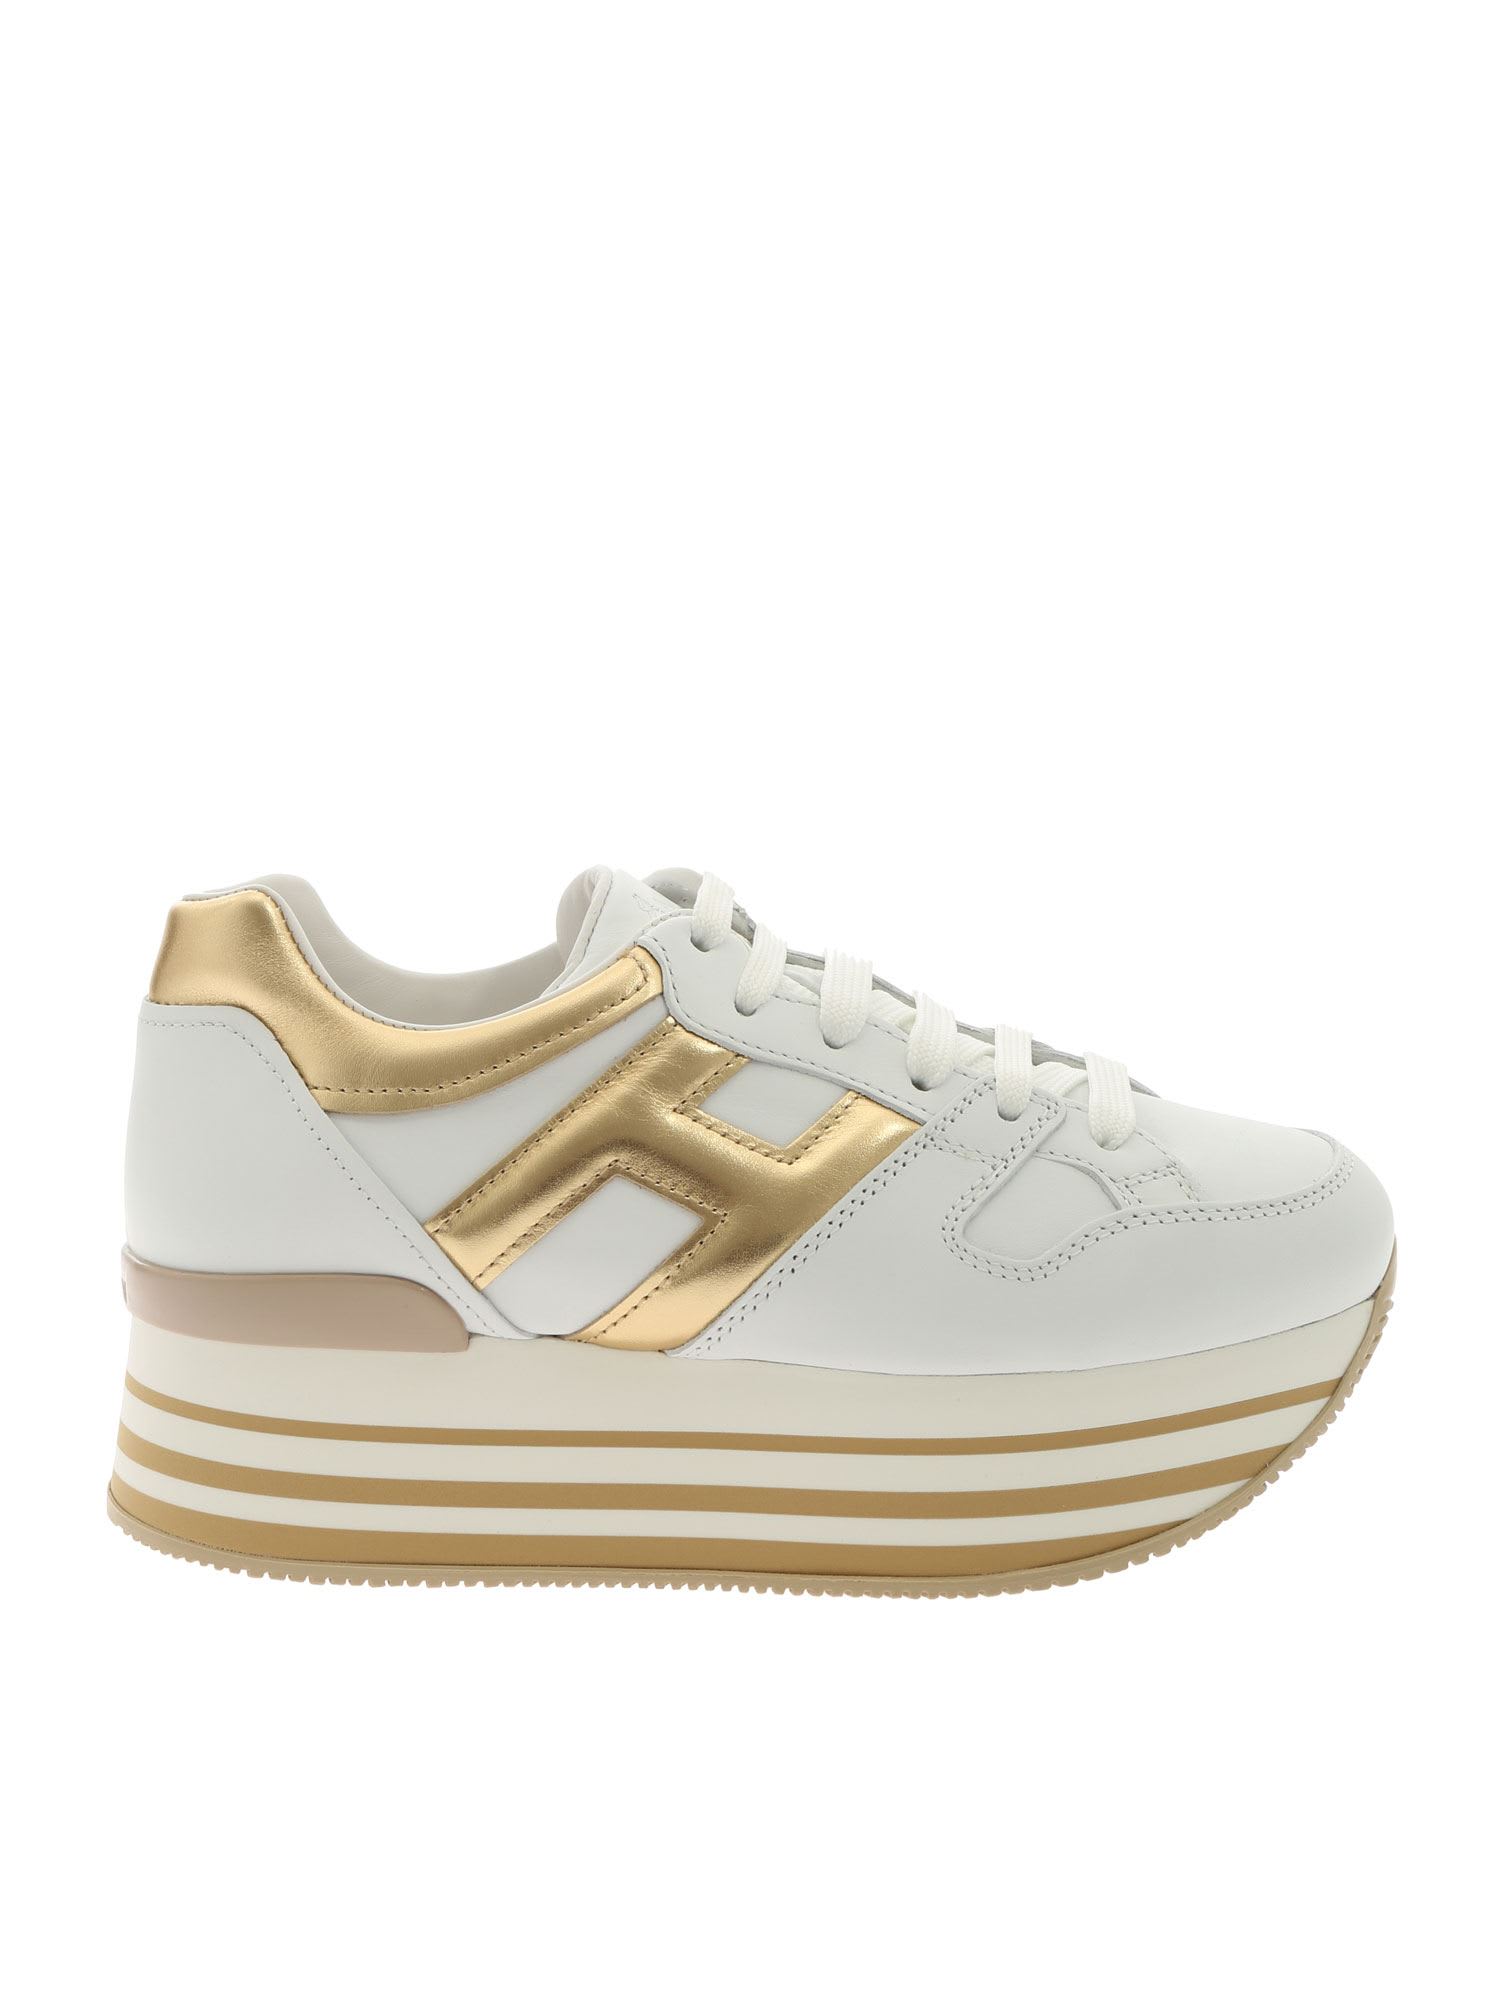 Hogan Hogan Maxi H222 Platform Sneakers - White/Gold - 10833128 | italist